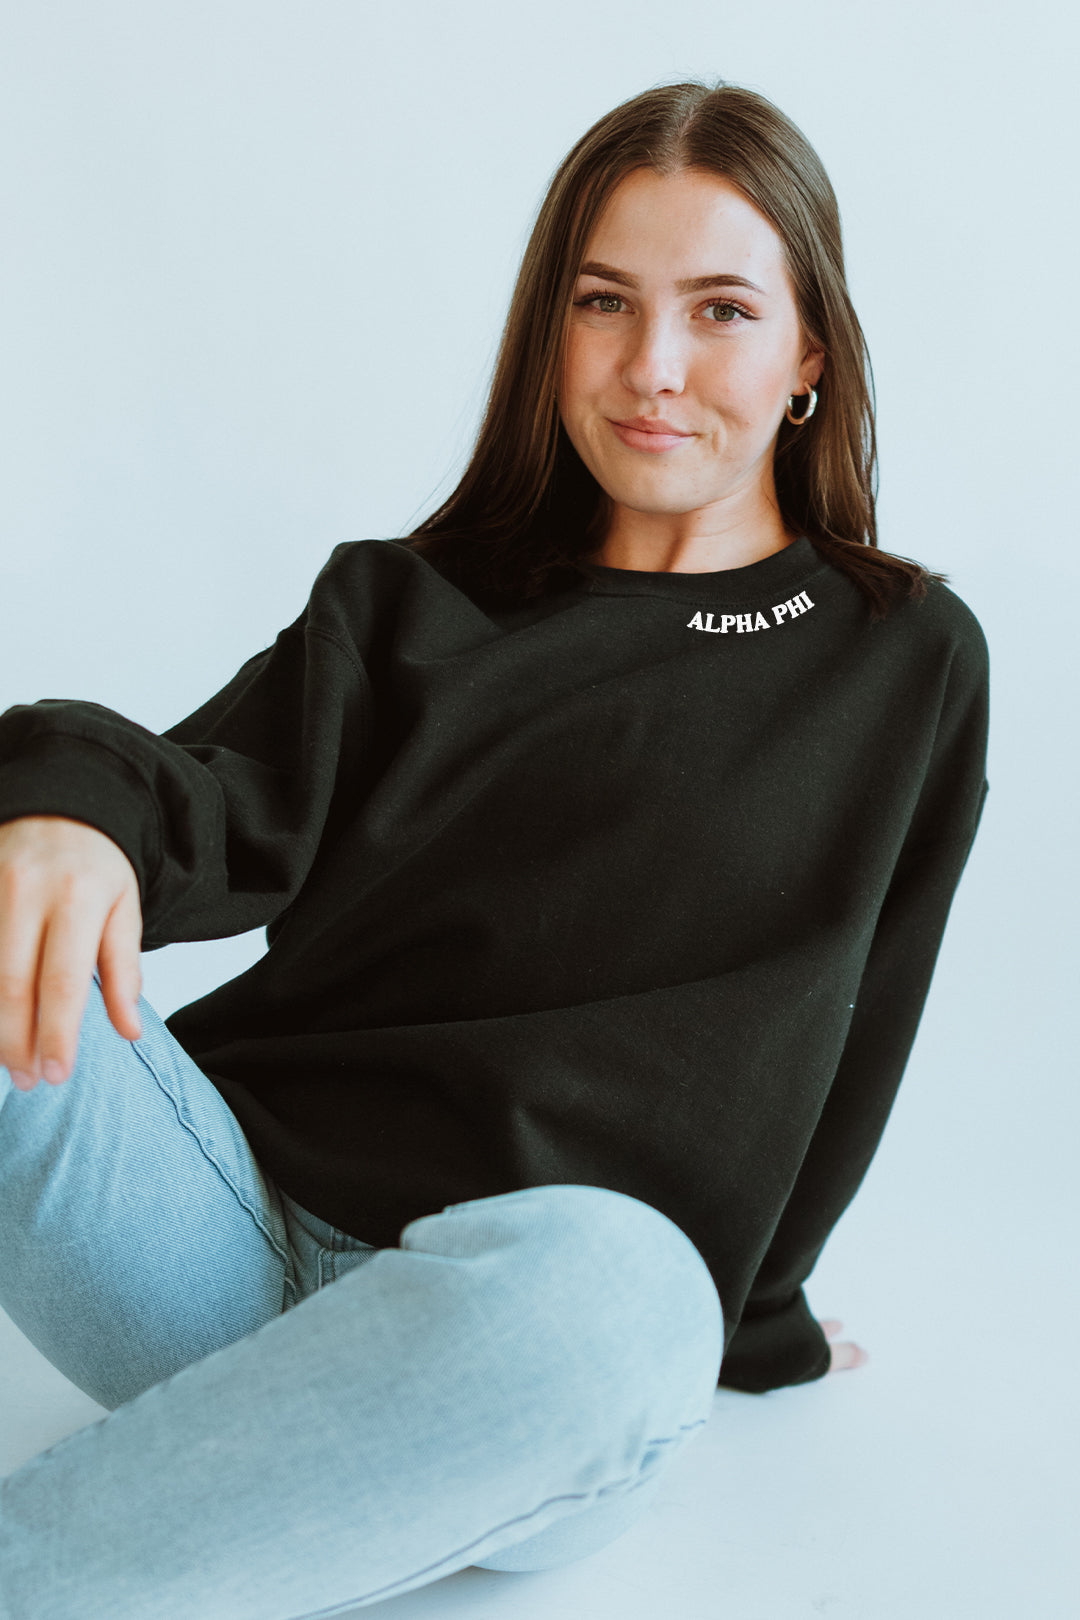 Black sweatshirt with White Collar text - Alpha Phi